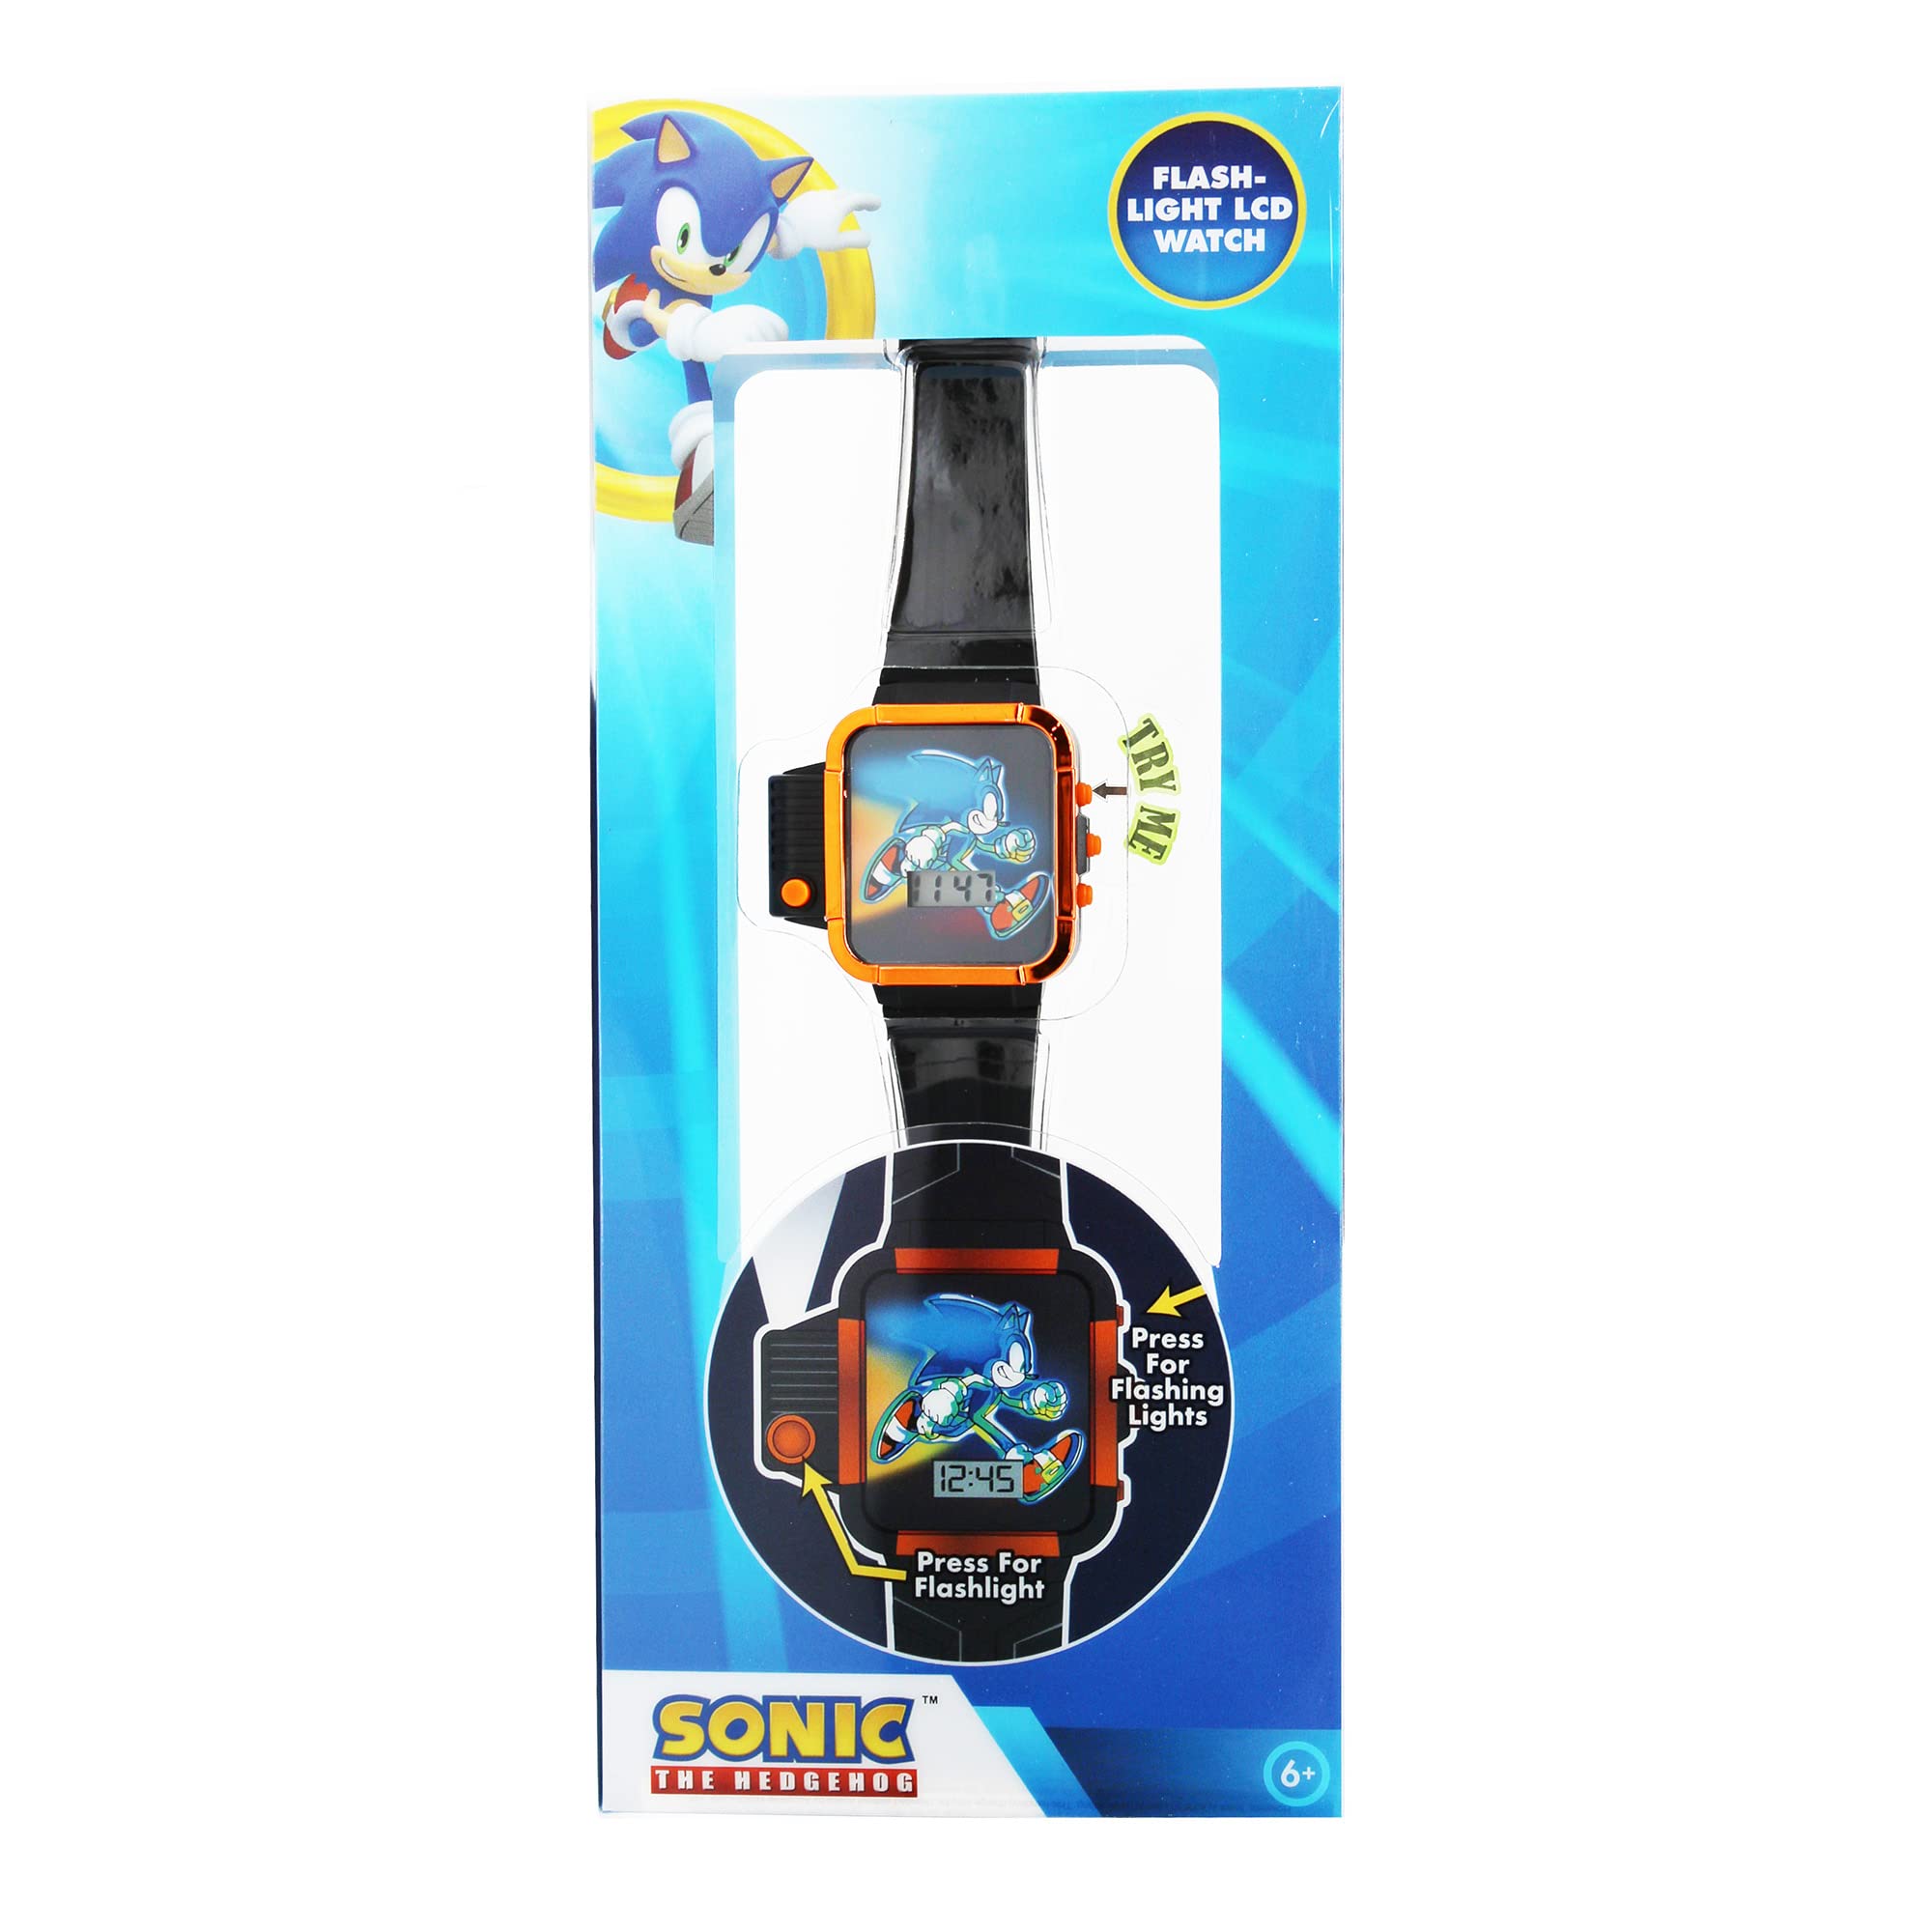 Accutime Kids SEGA Sonic The Hedgehog Black & Orange Digital LCD Quartz Wrist Watch with Flashlight, Black Strap for Boys, Girls, Kids (Model: SNC4248MAZ)